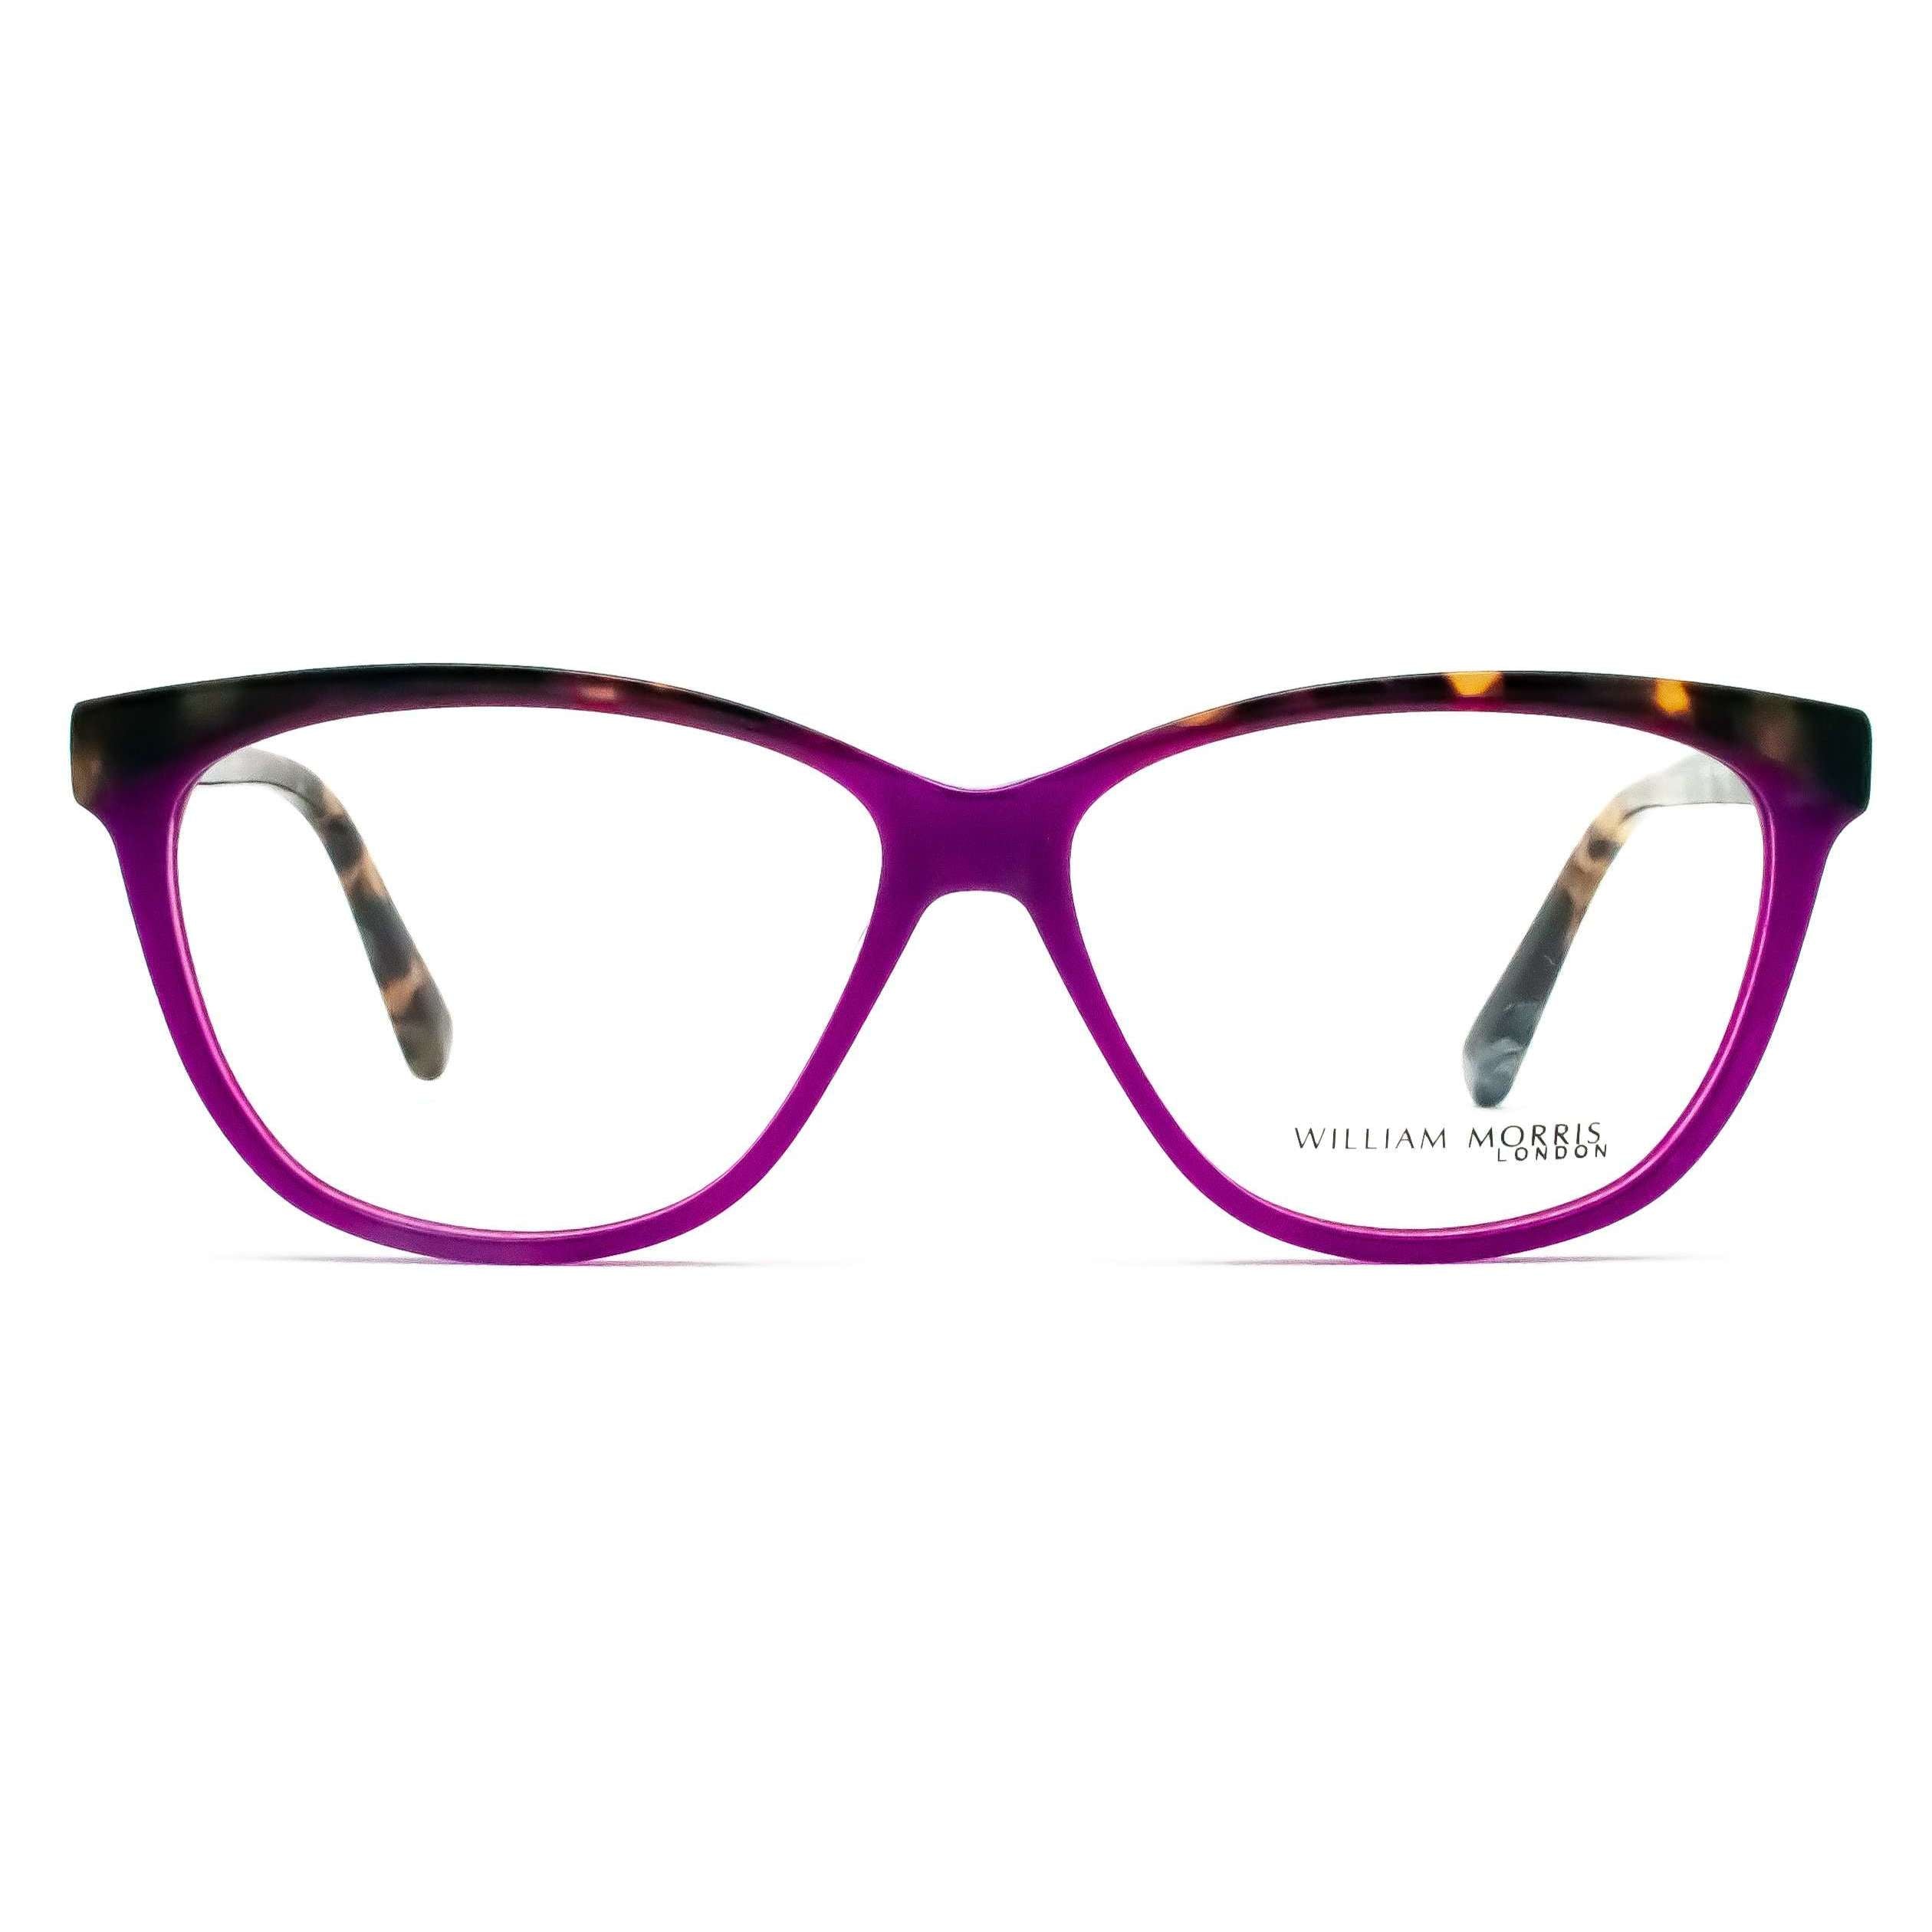 William Morris London LN50050 Cat Eye Glasses